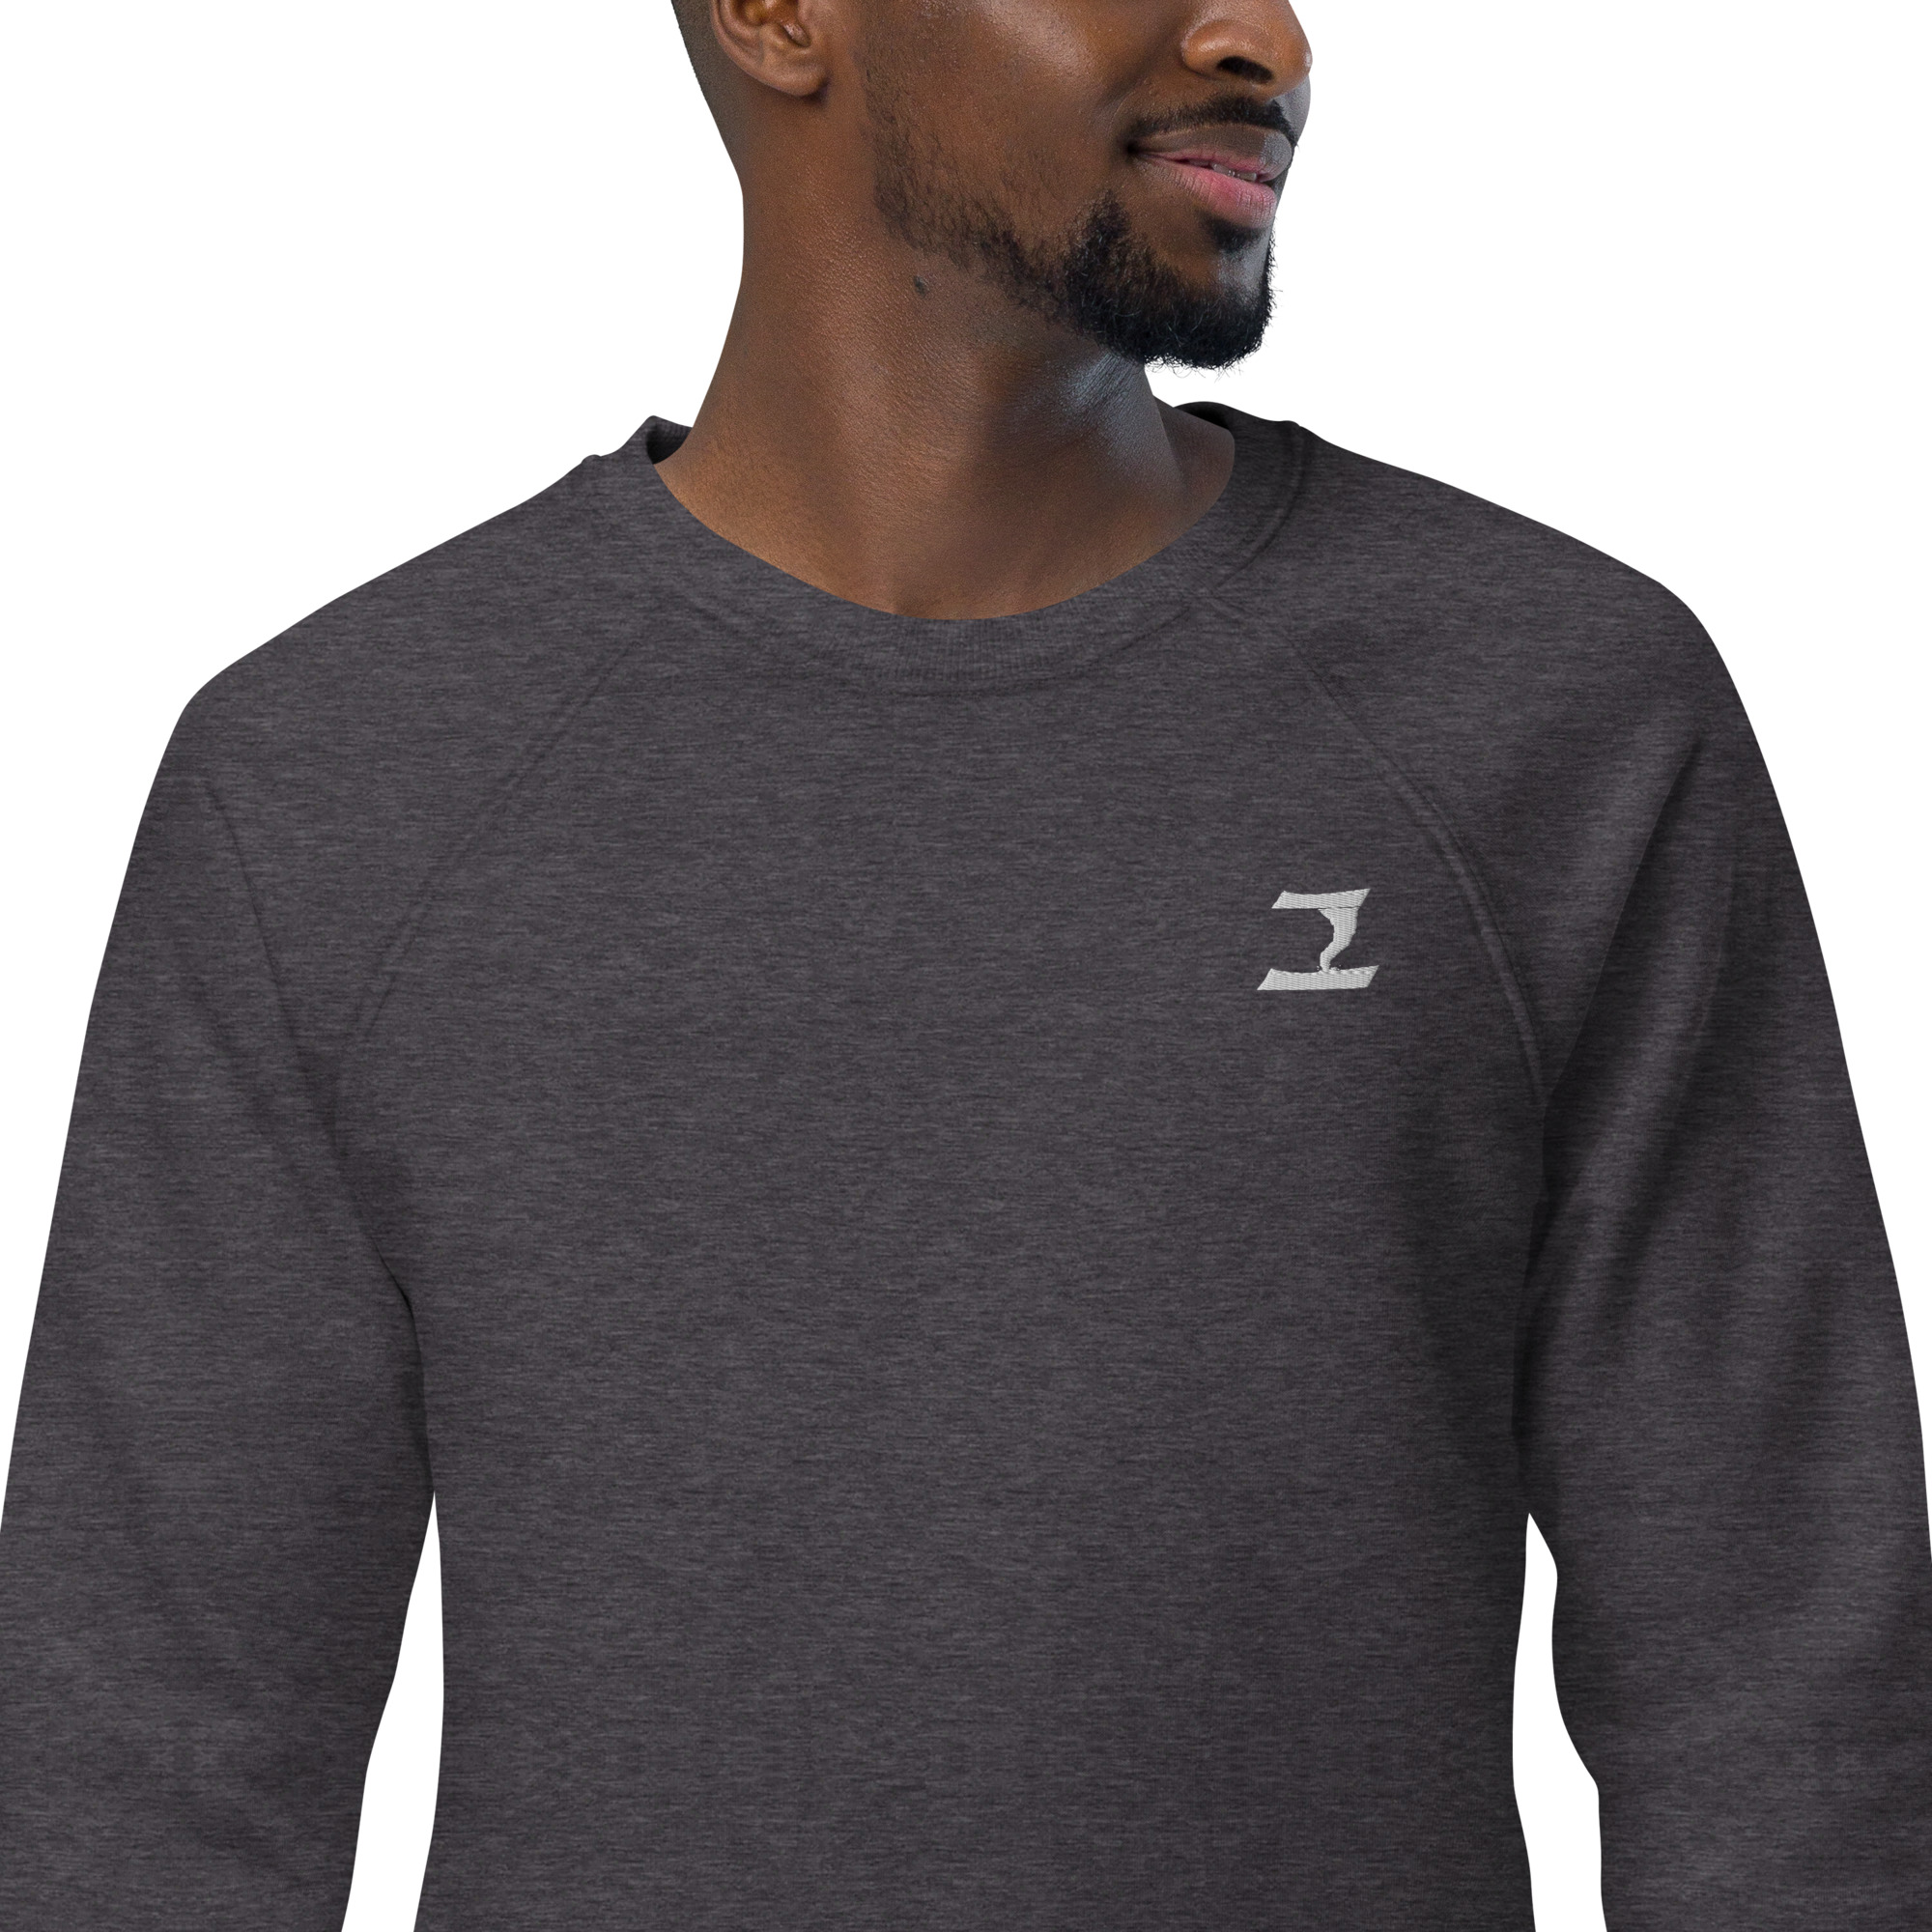 unisex-organic-raglan-sweatshirt-charcoal-melange-zoomed-in-6334e2624b60c.jpg